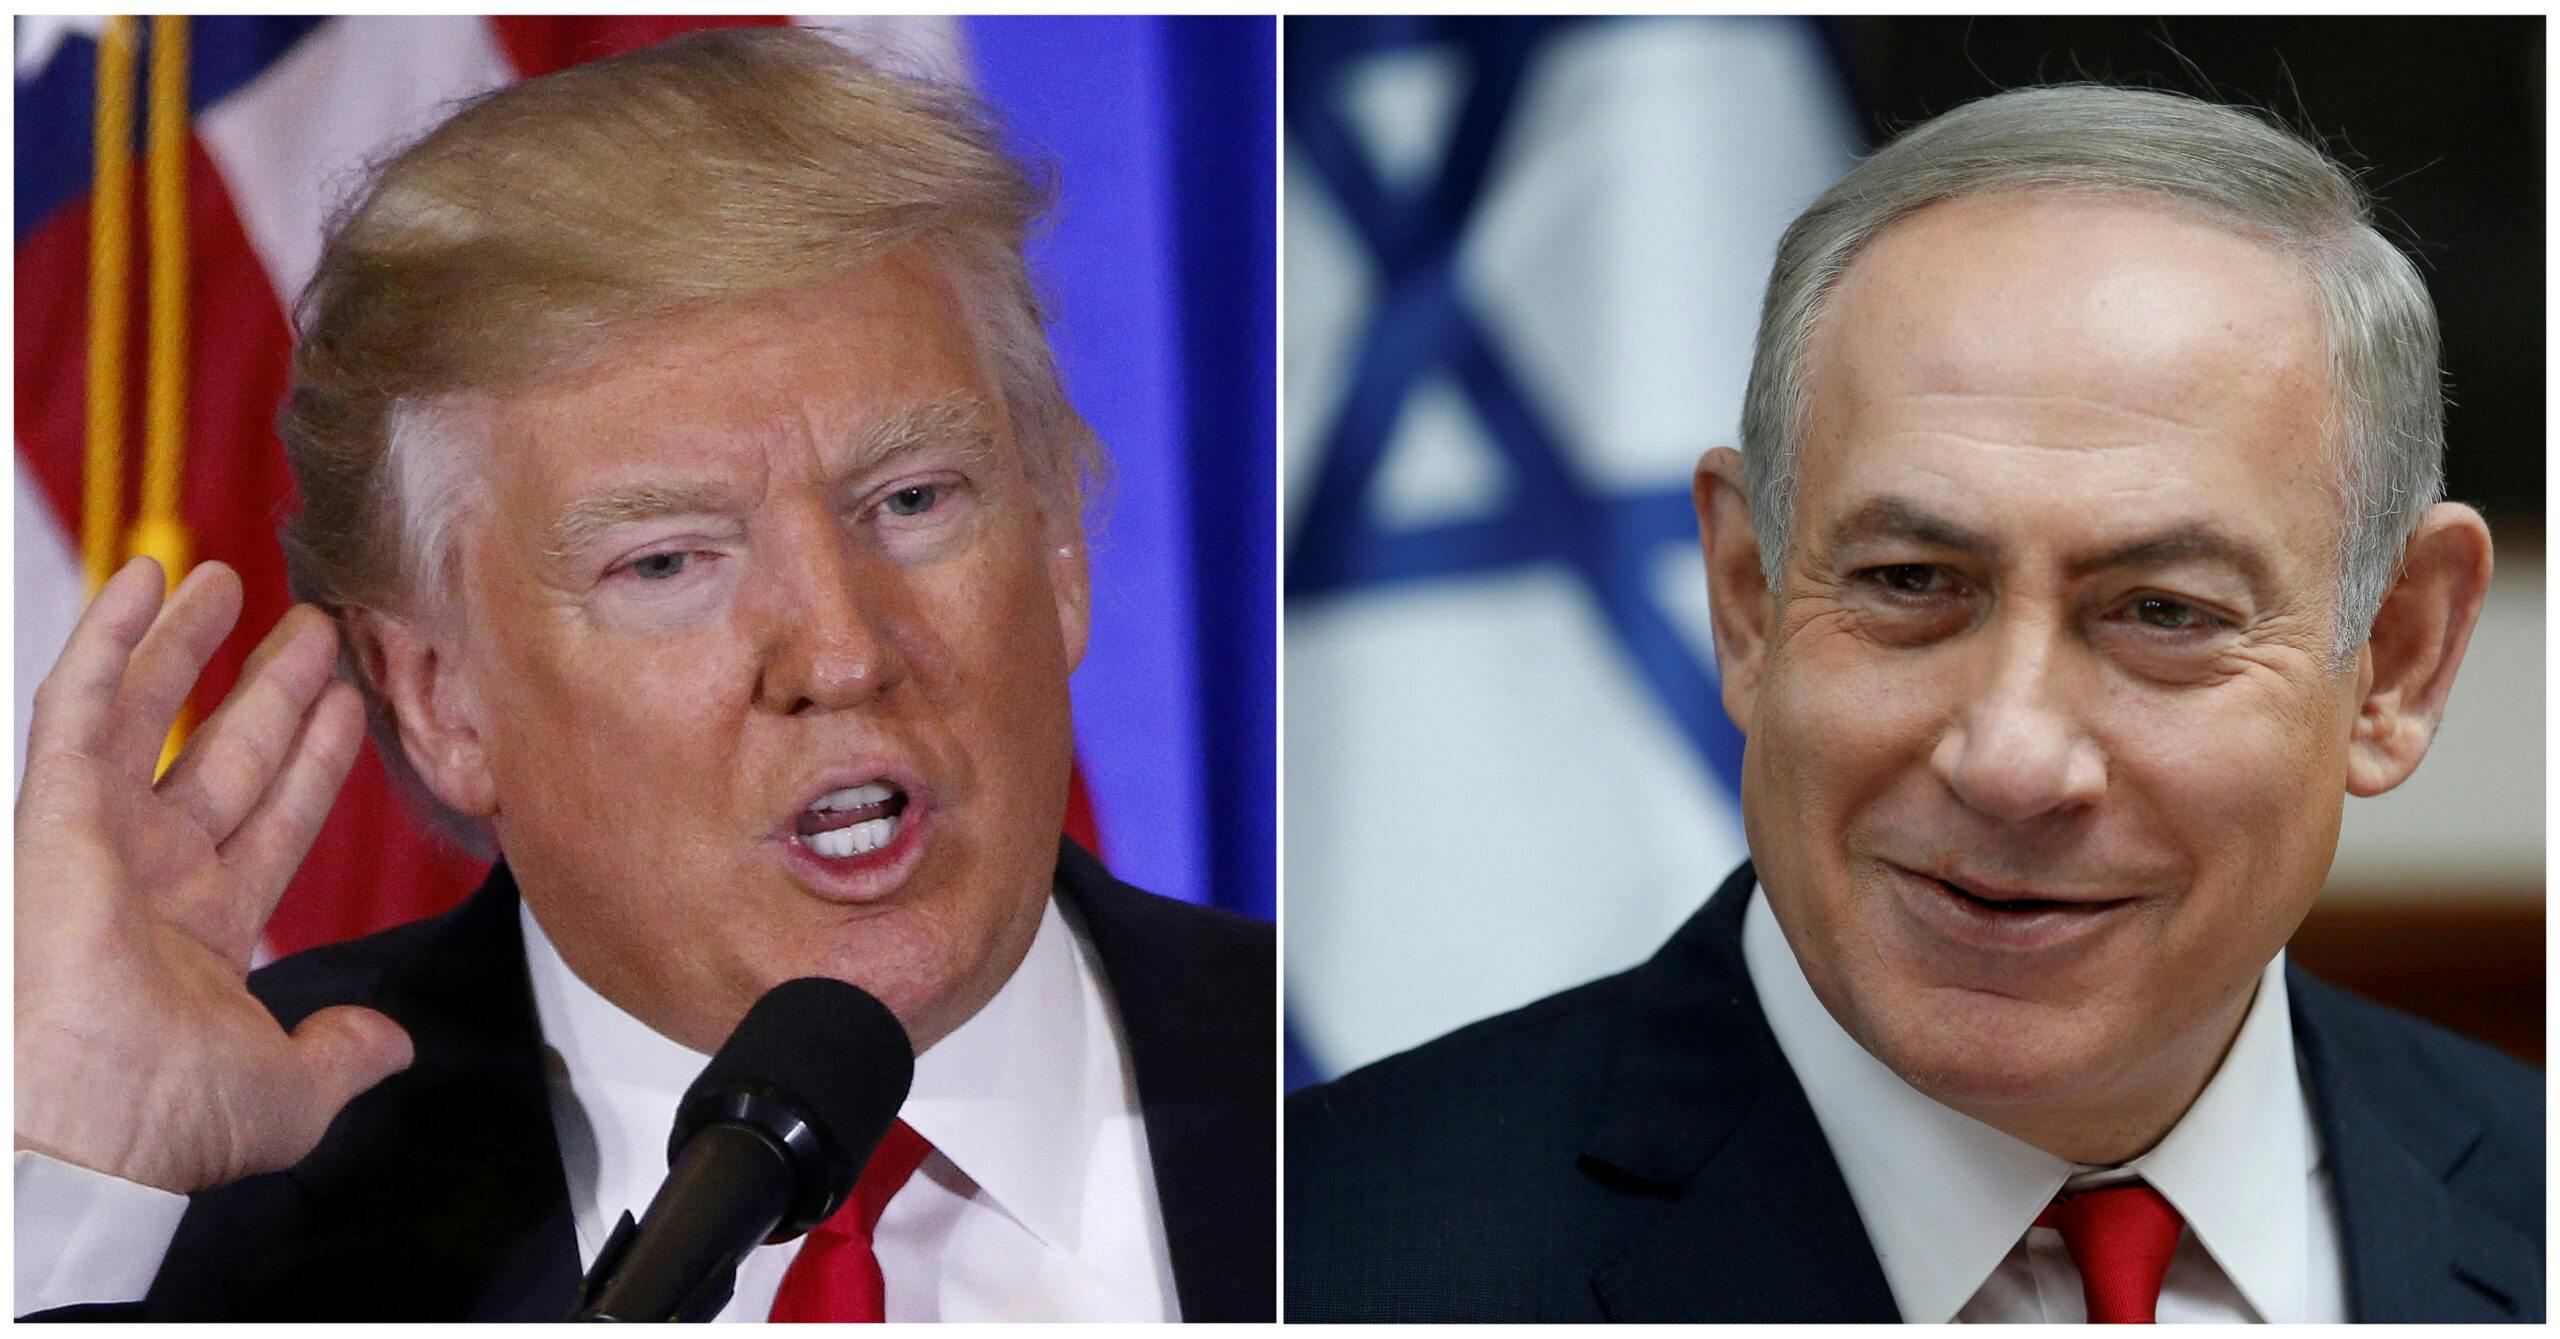 File photo combination of U.S. President Donald Trump and Israeli Prime Minister Benjamin Netanyahu